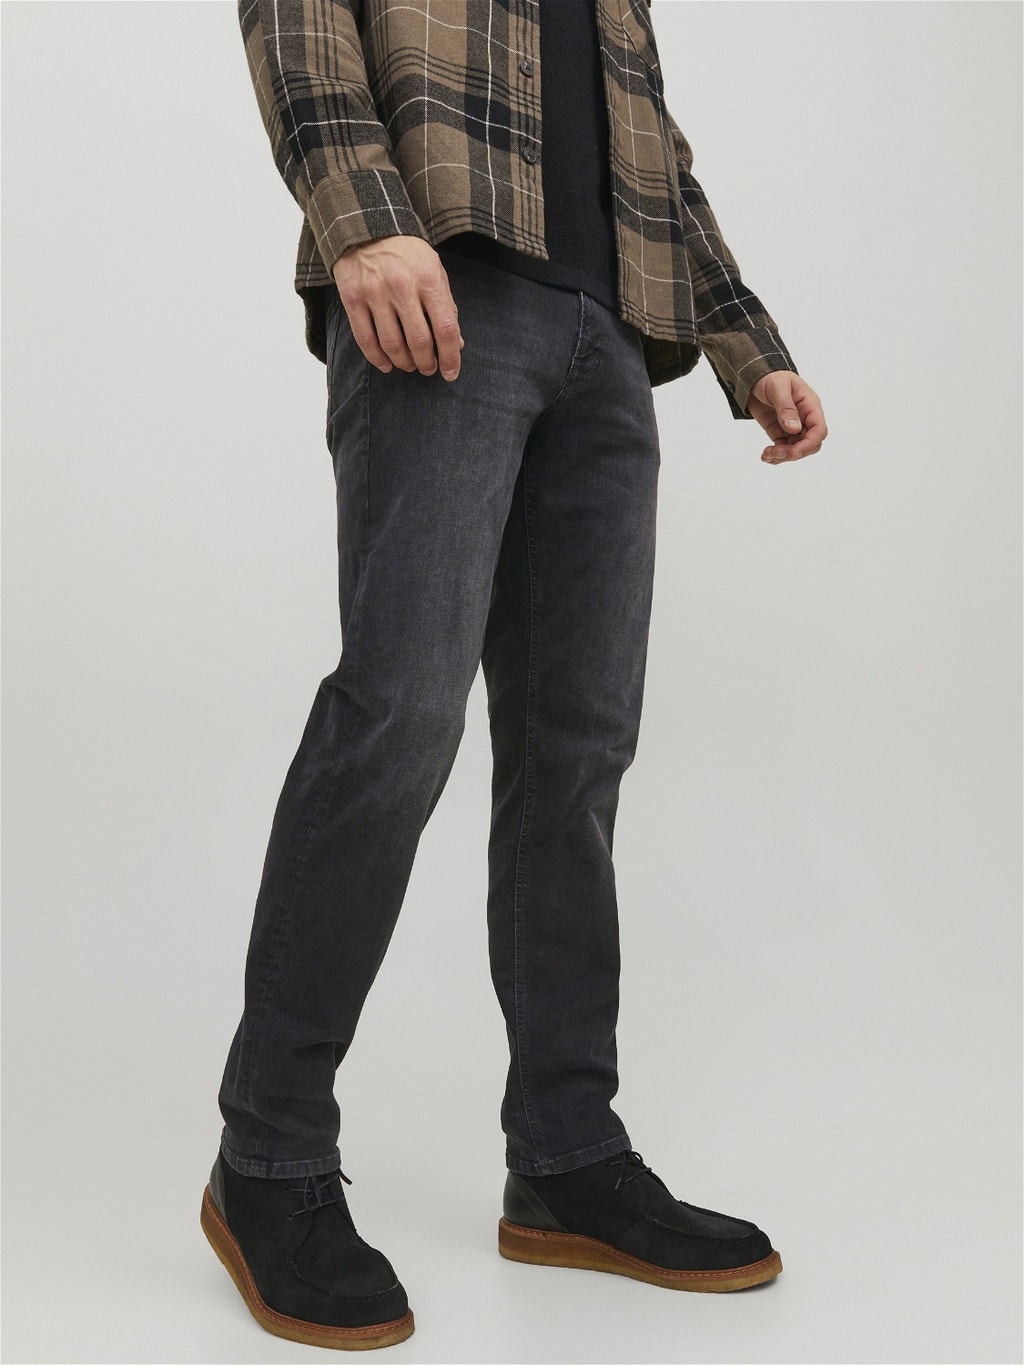 generation Afsky tavle Clark Original JOS 201 Regular fit jeans